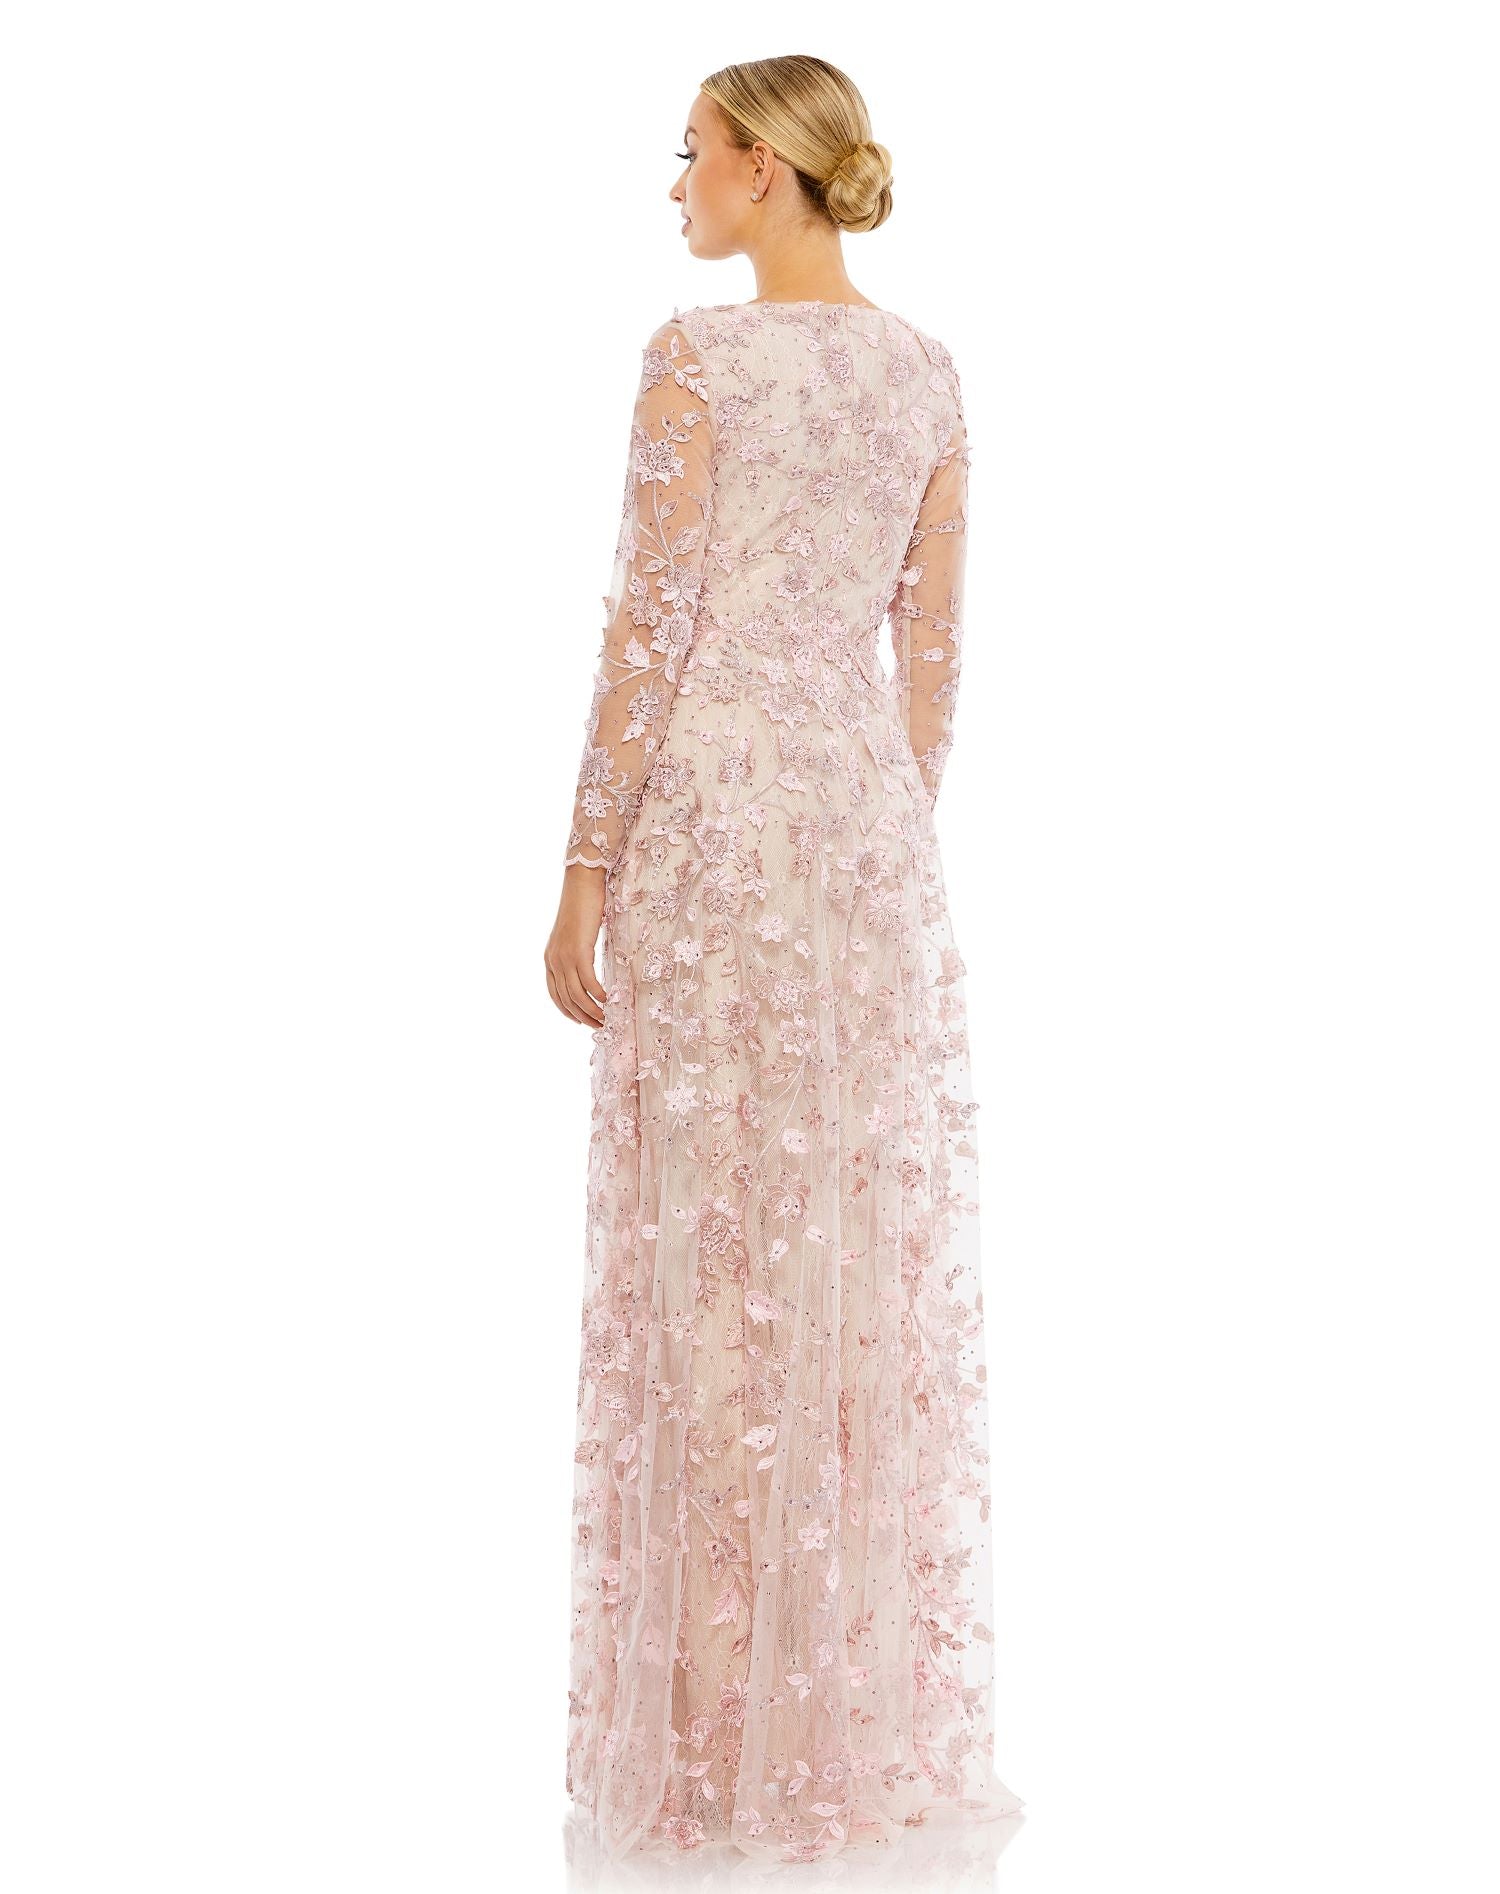 Floral Applique Long Sleeve Illusion Gown